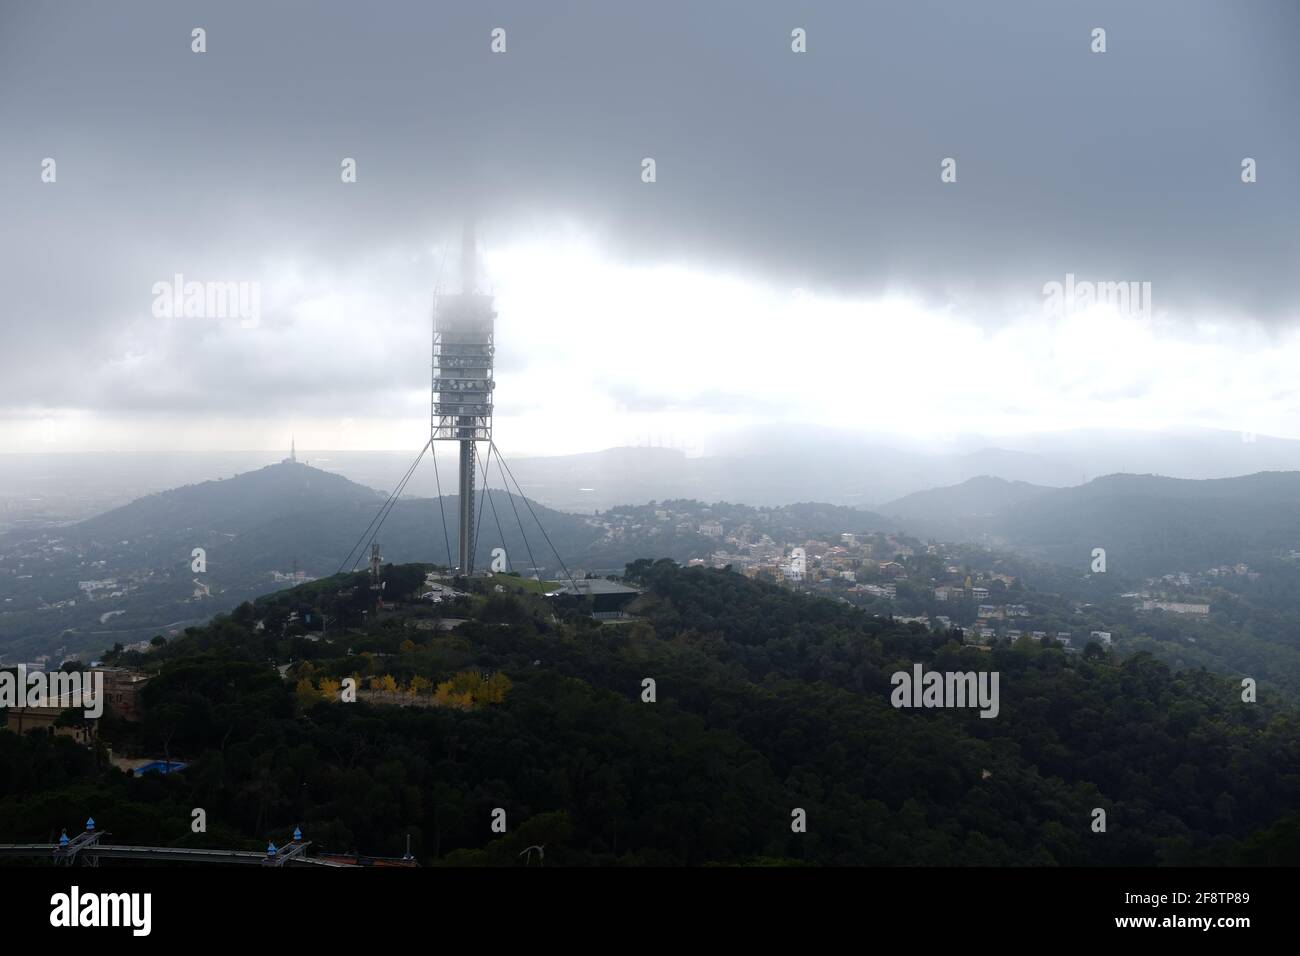 BARCELONA, SPAIN - NOVEMBER 2018: Torre de Collserola radio mast on the Tipidabo hill. Stock Photo